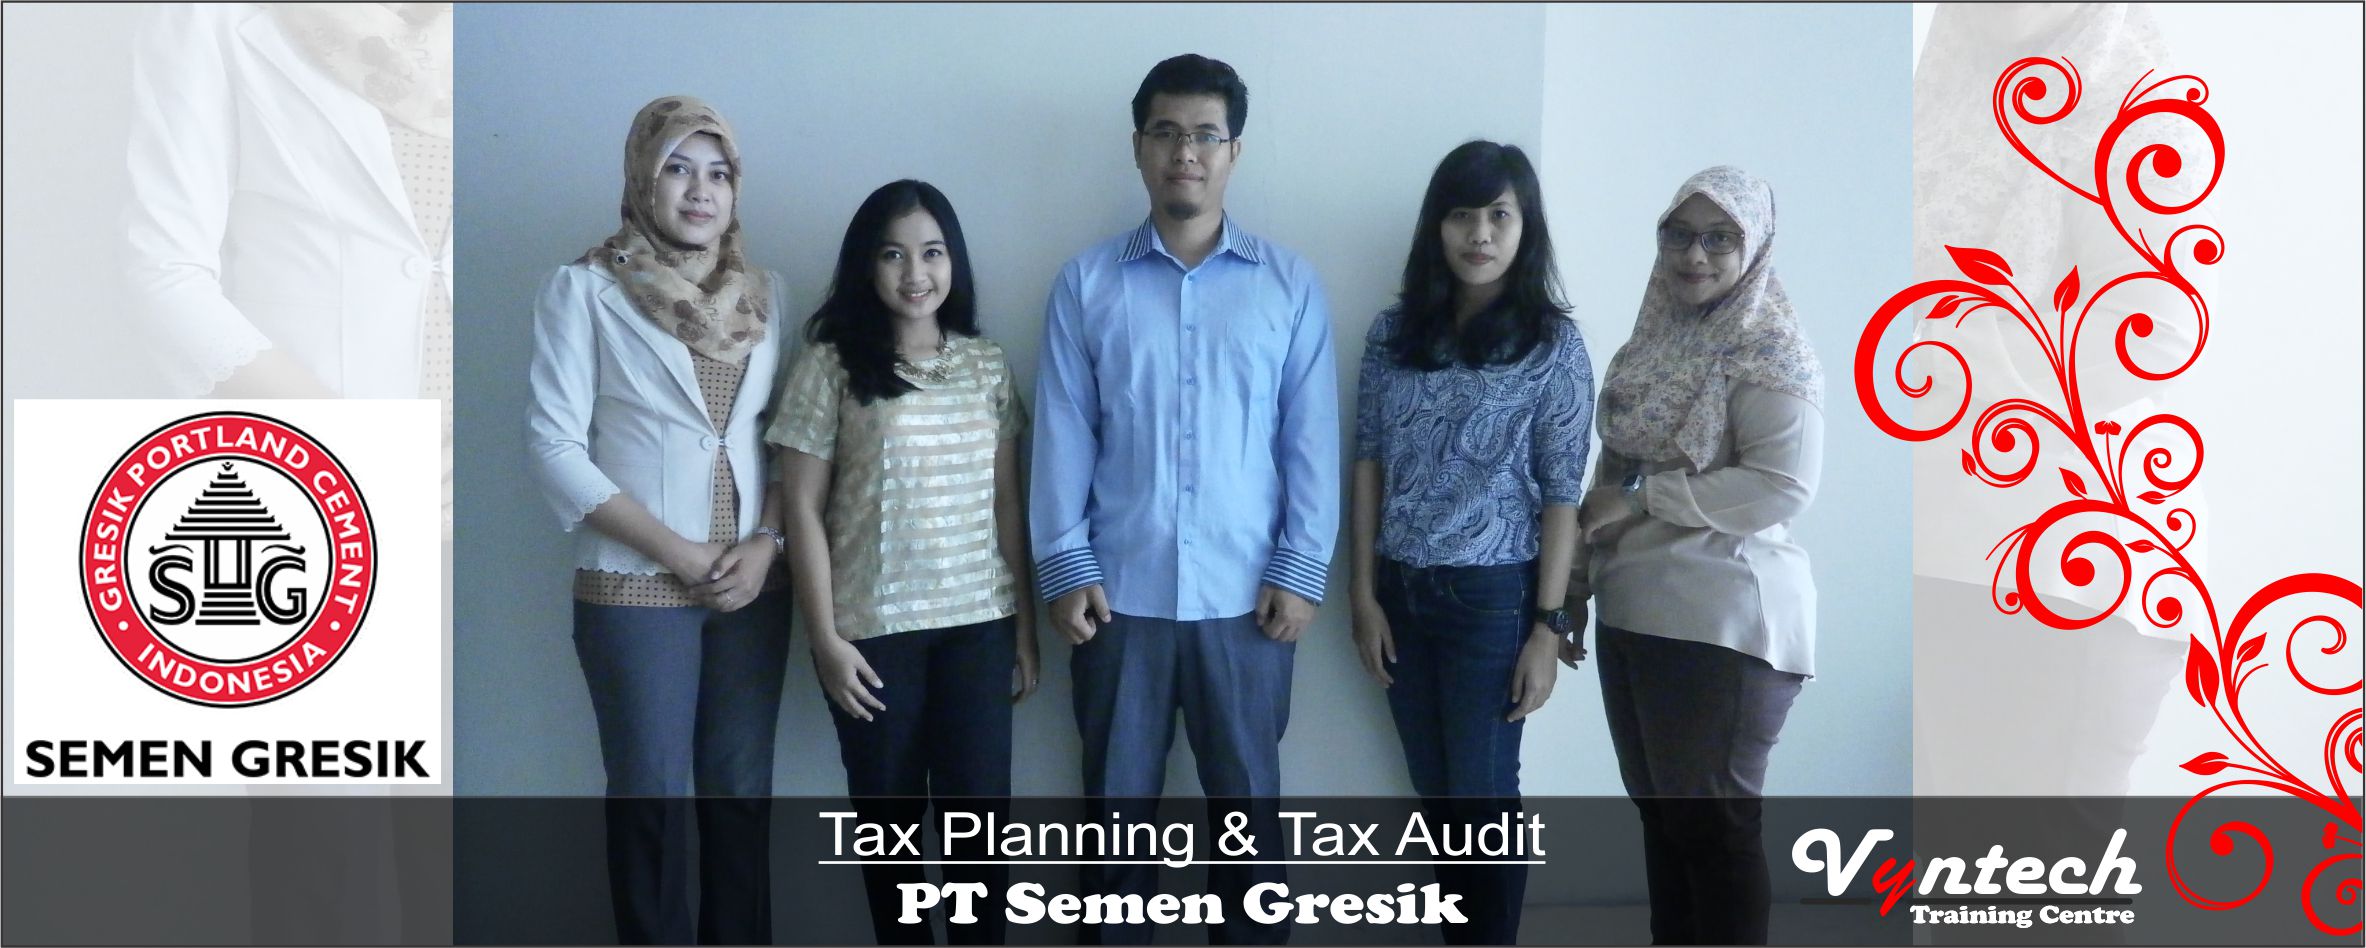 20151021 Training Tax Planning & Tax Audit - PT Semen Gresik